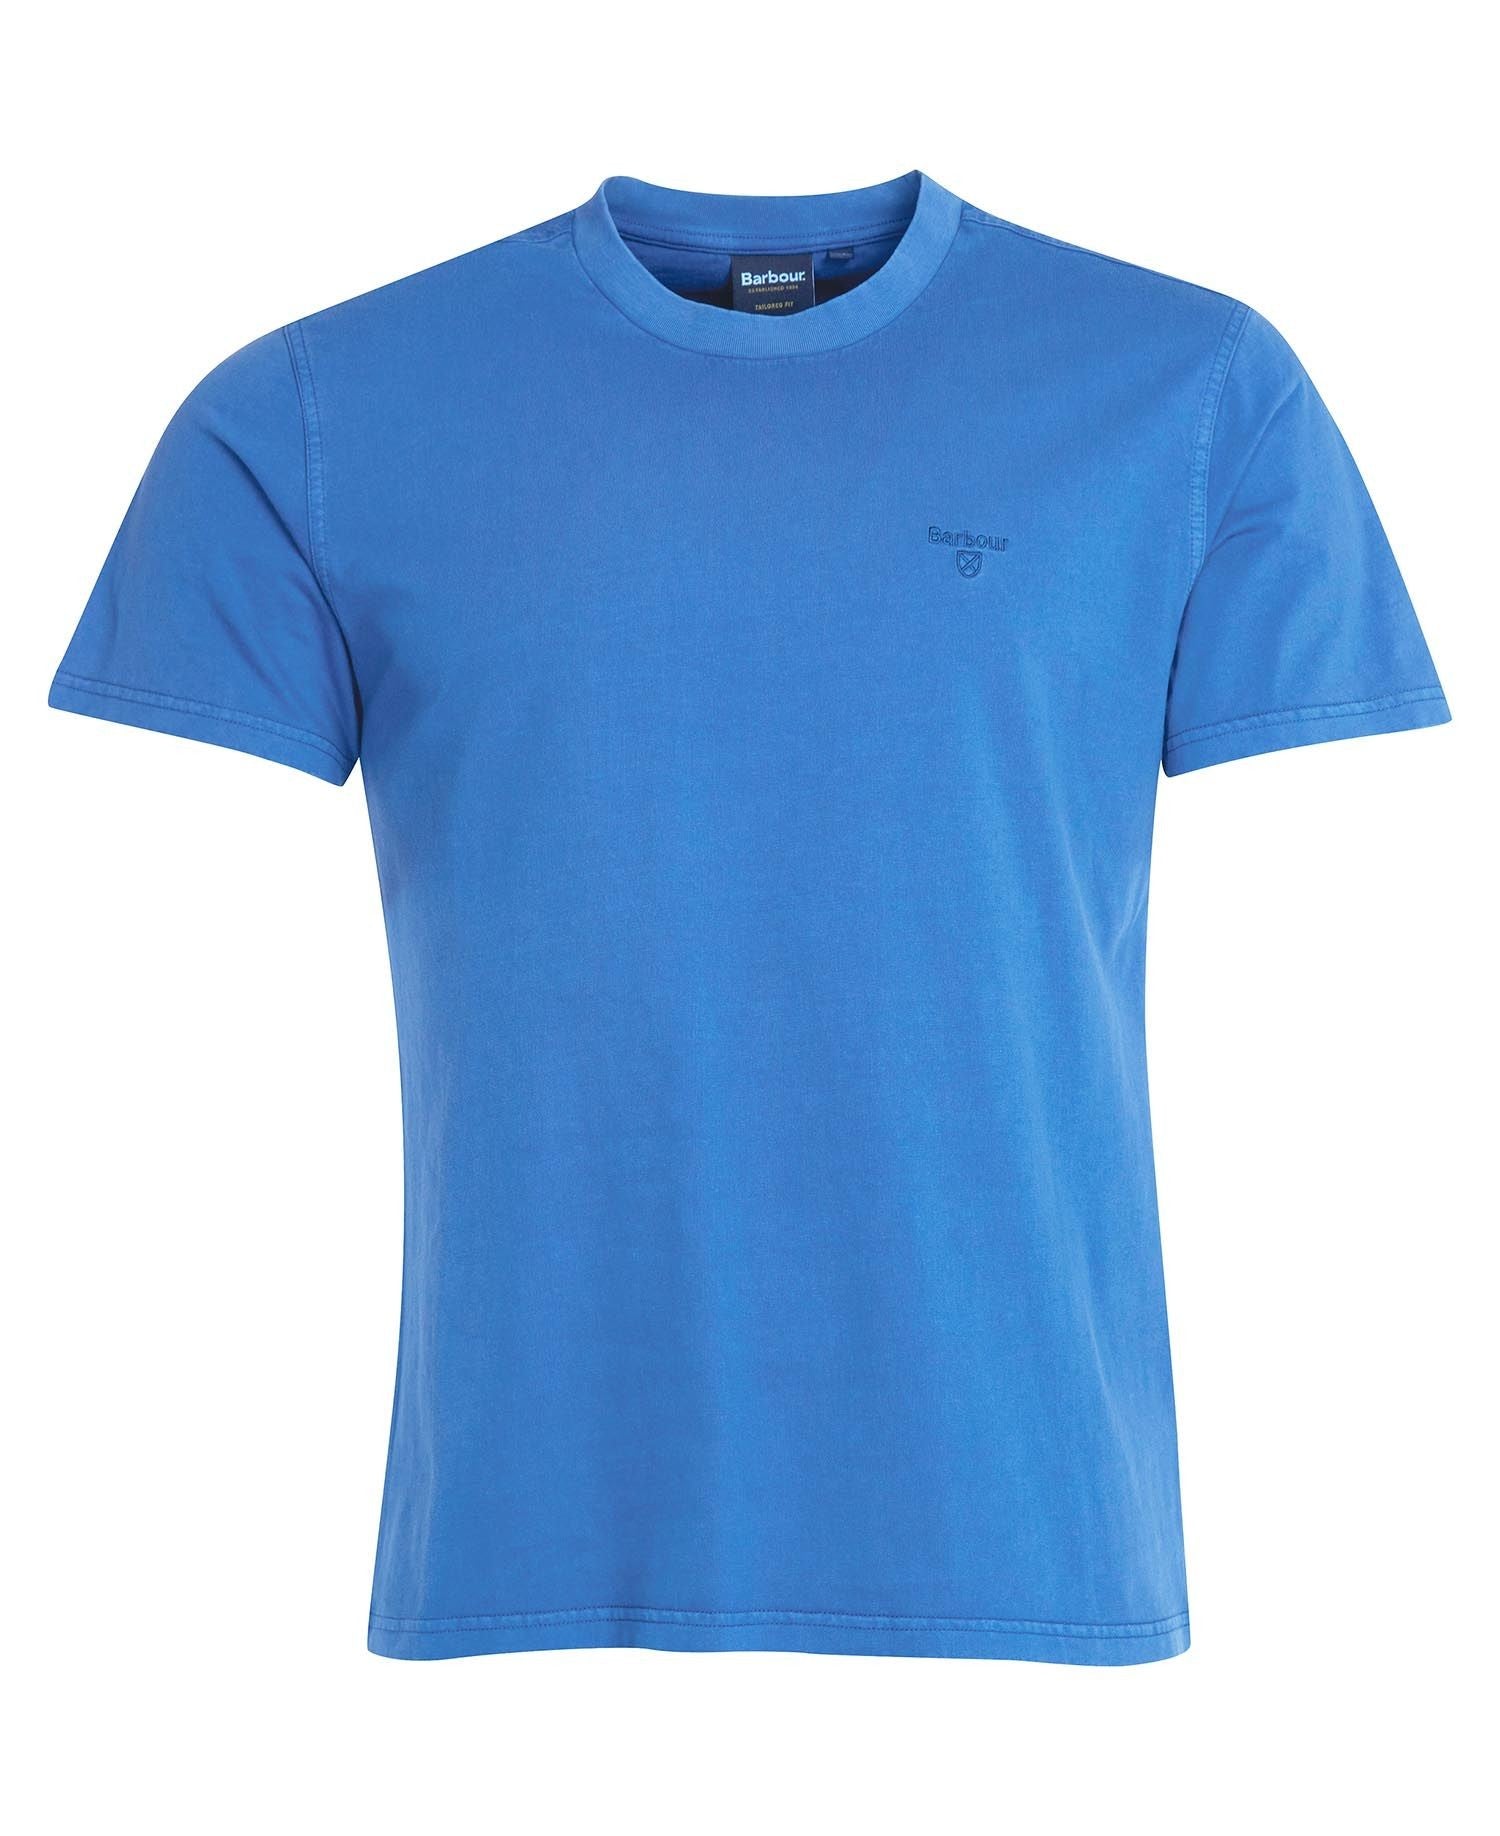 Barbour Garment Dyed T-Shirt Blue